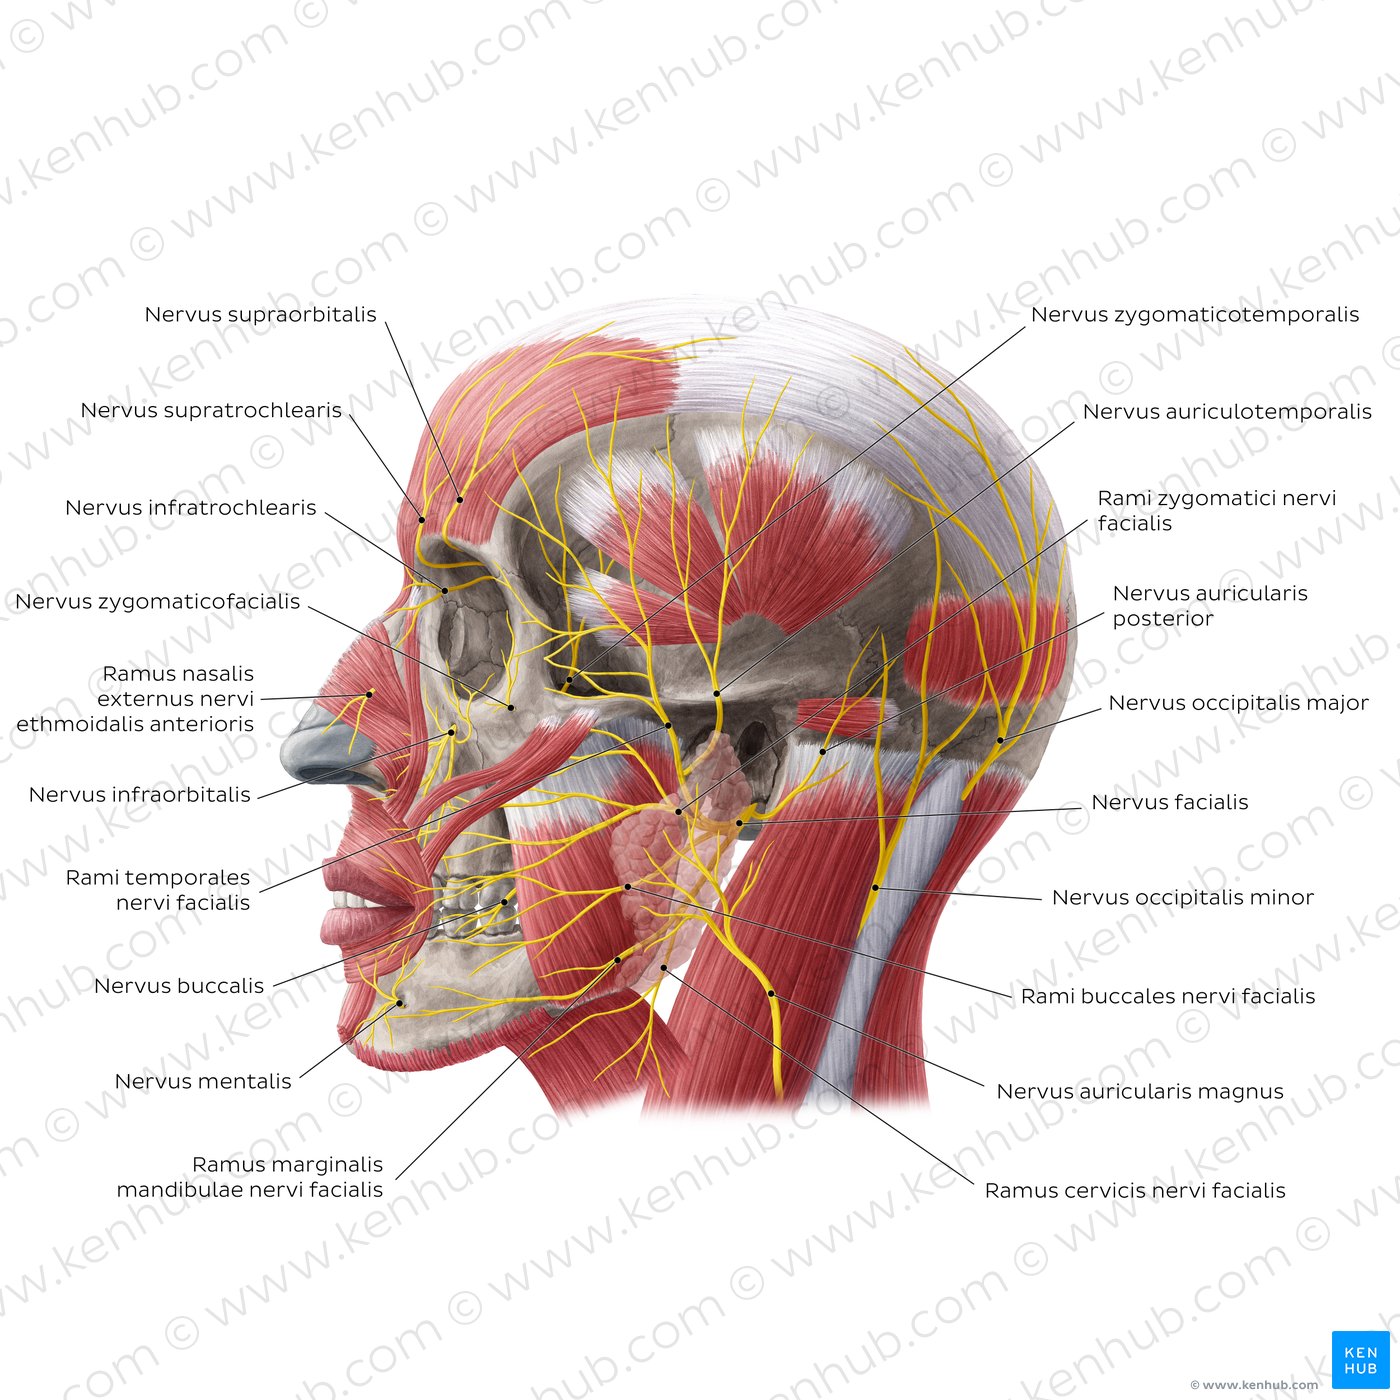 Nervus facialis Gesichtsnerv   Anatomie & Klinik   Kenhub